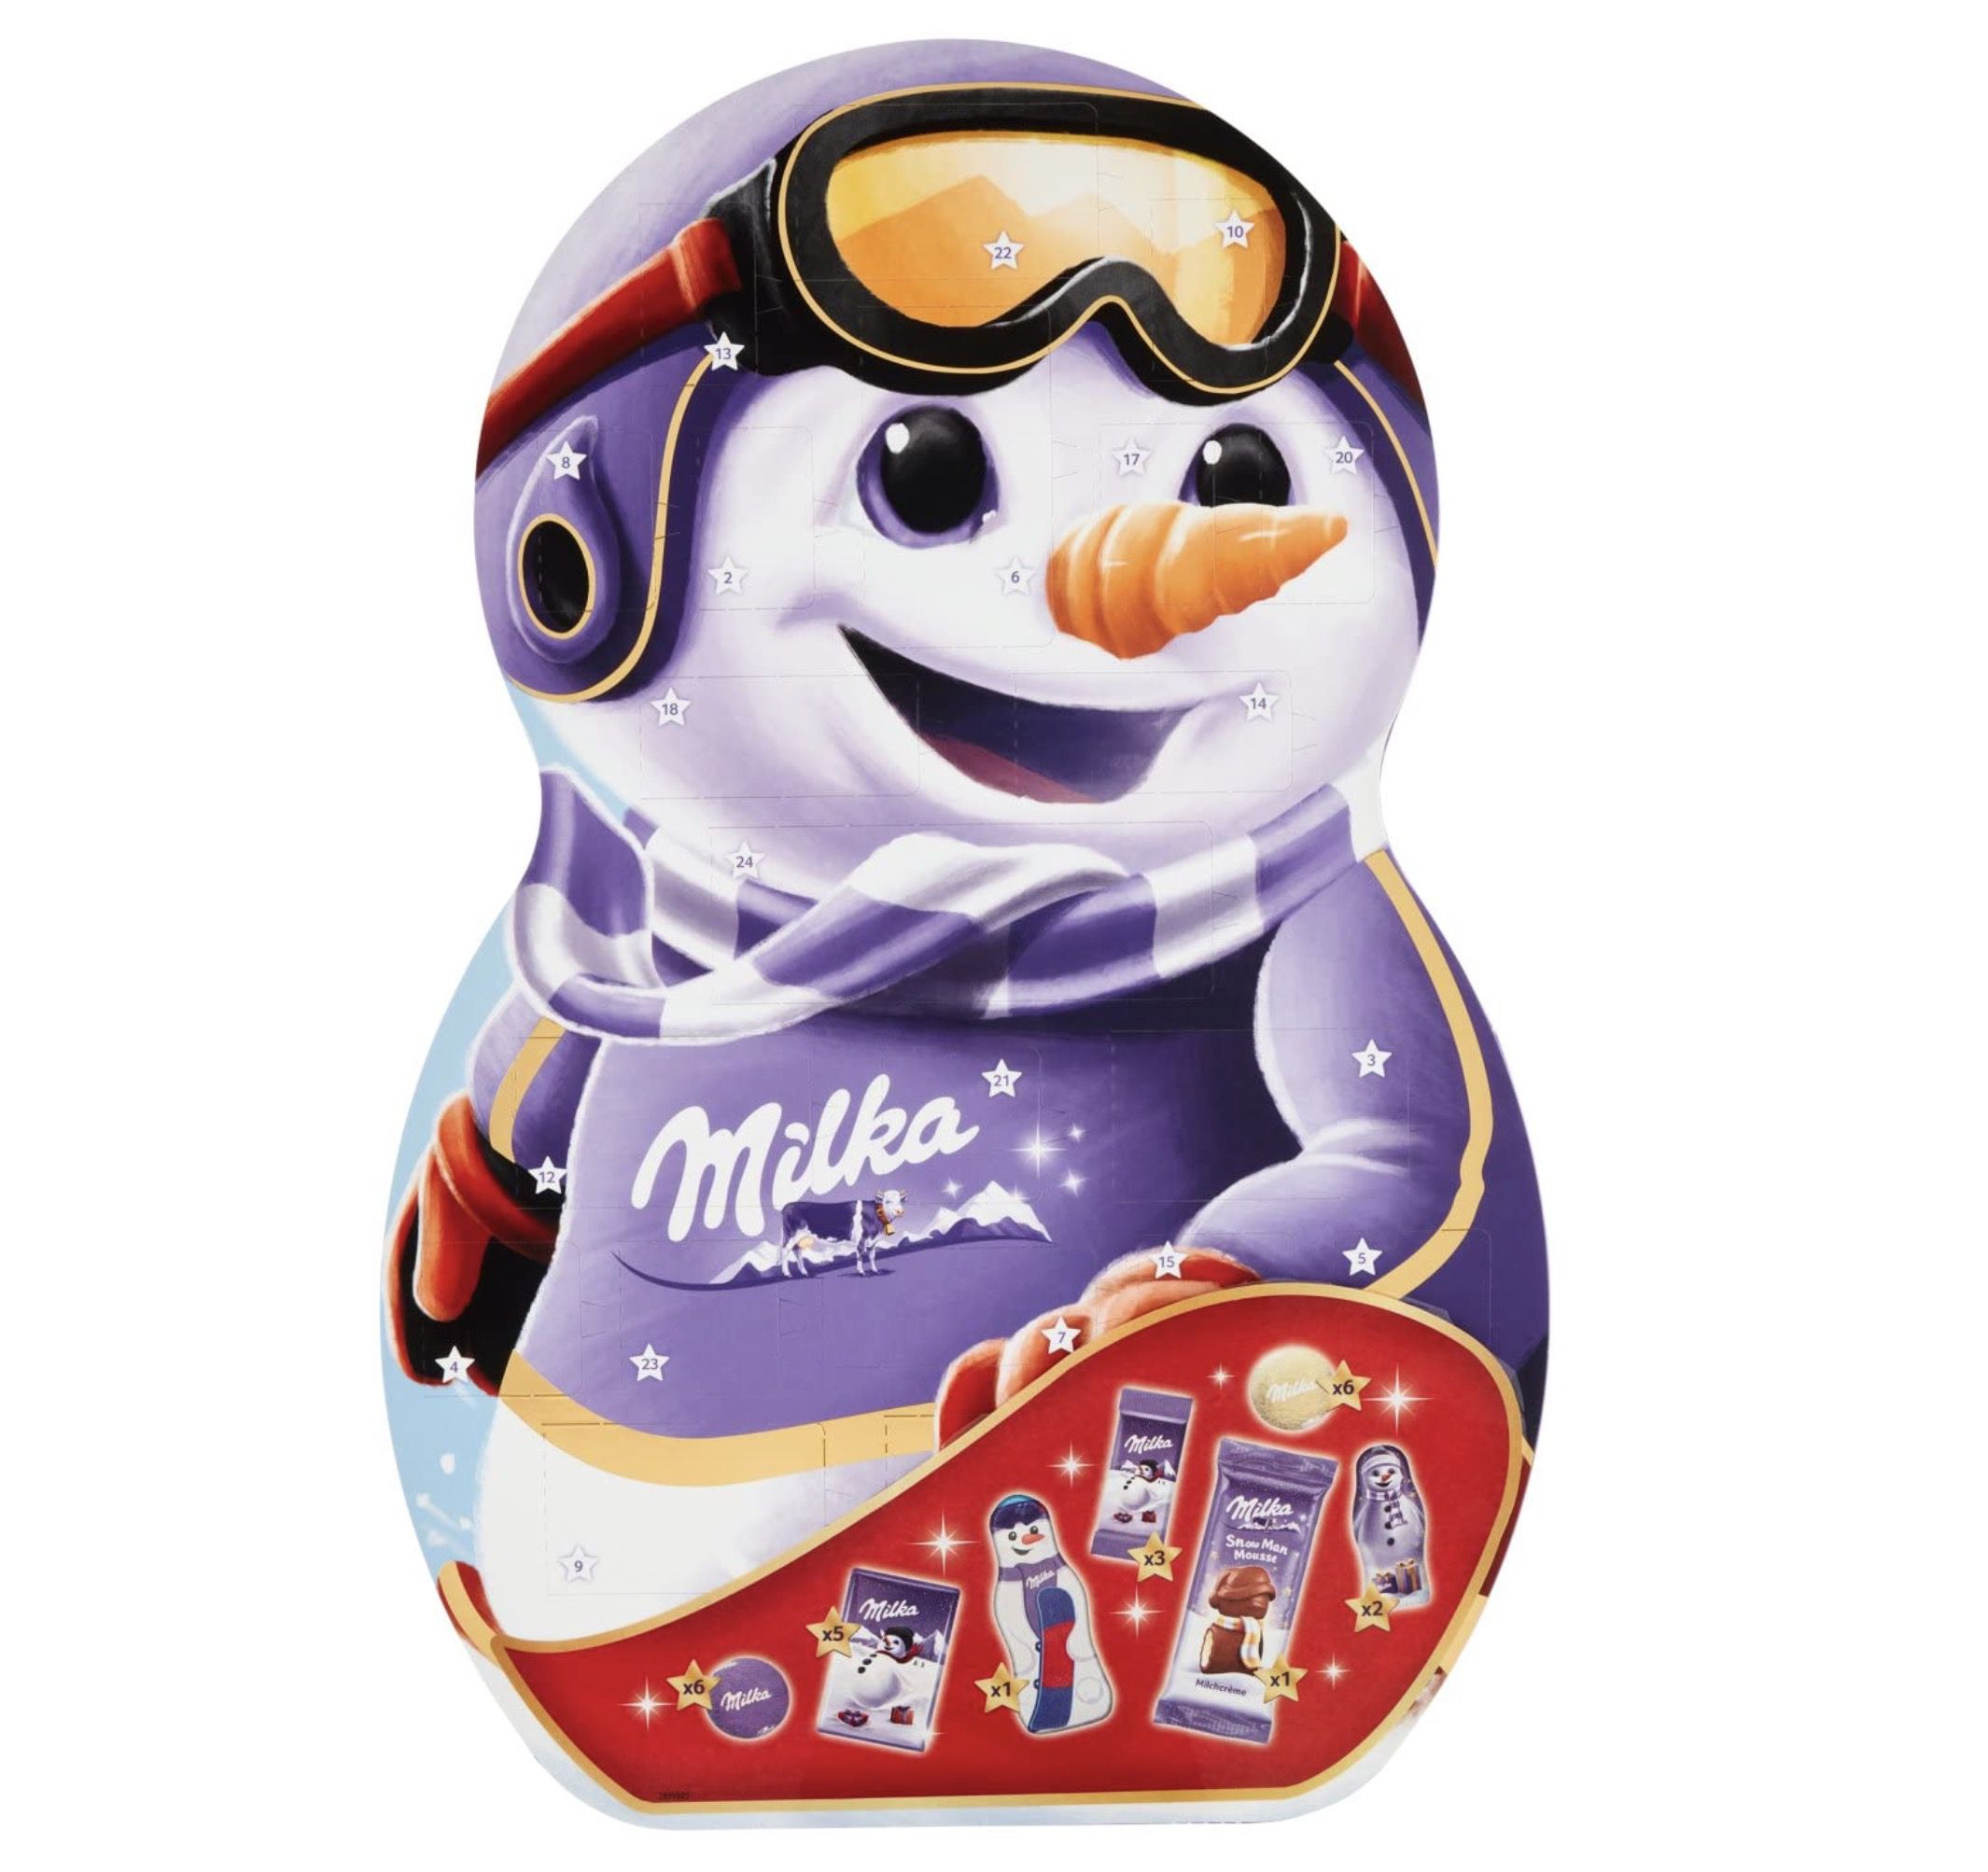 Milka Snow Mix Adventskalender ab 6,49€ (statt 11€)   Prime